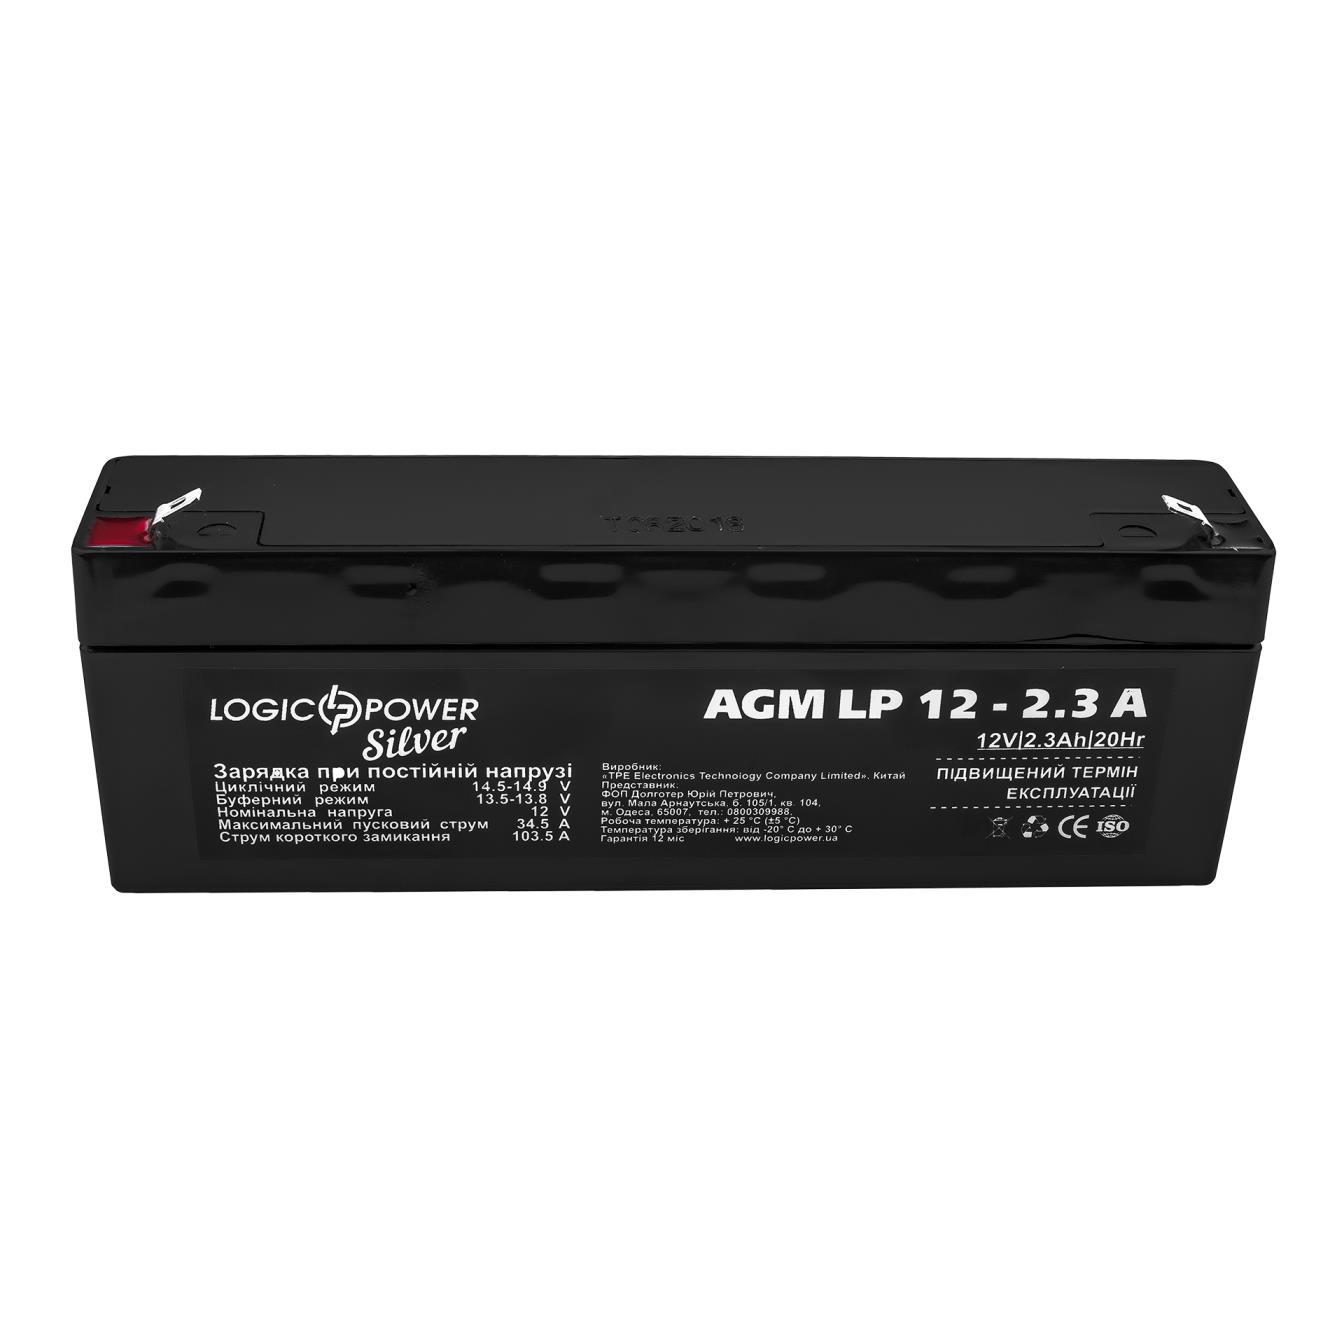 Аккумулятор свинцово-кислотный LogicPower AGM LP 12V - 2.3 Ah Silver (3224) цена 494 грн - фотография 2